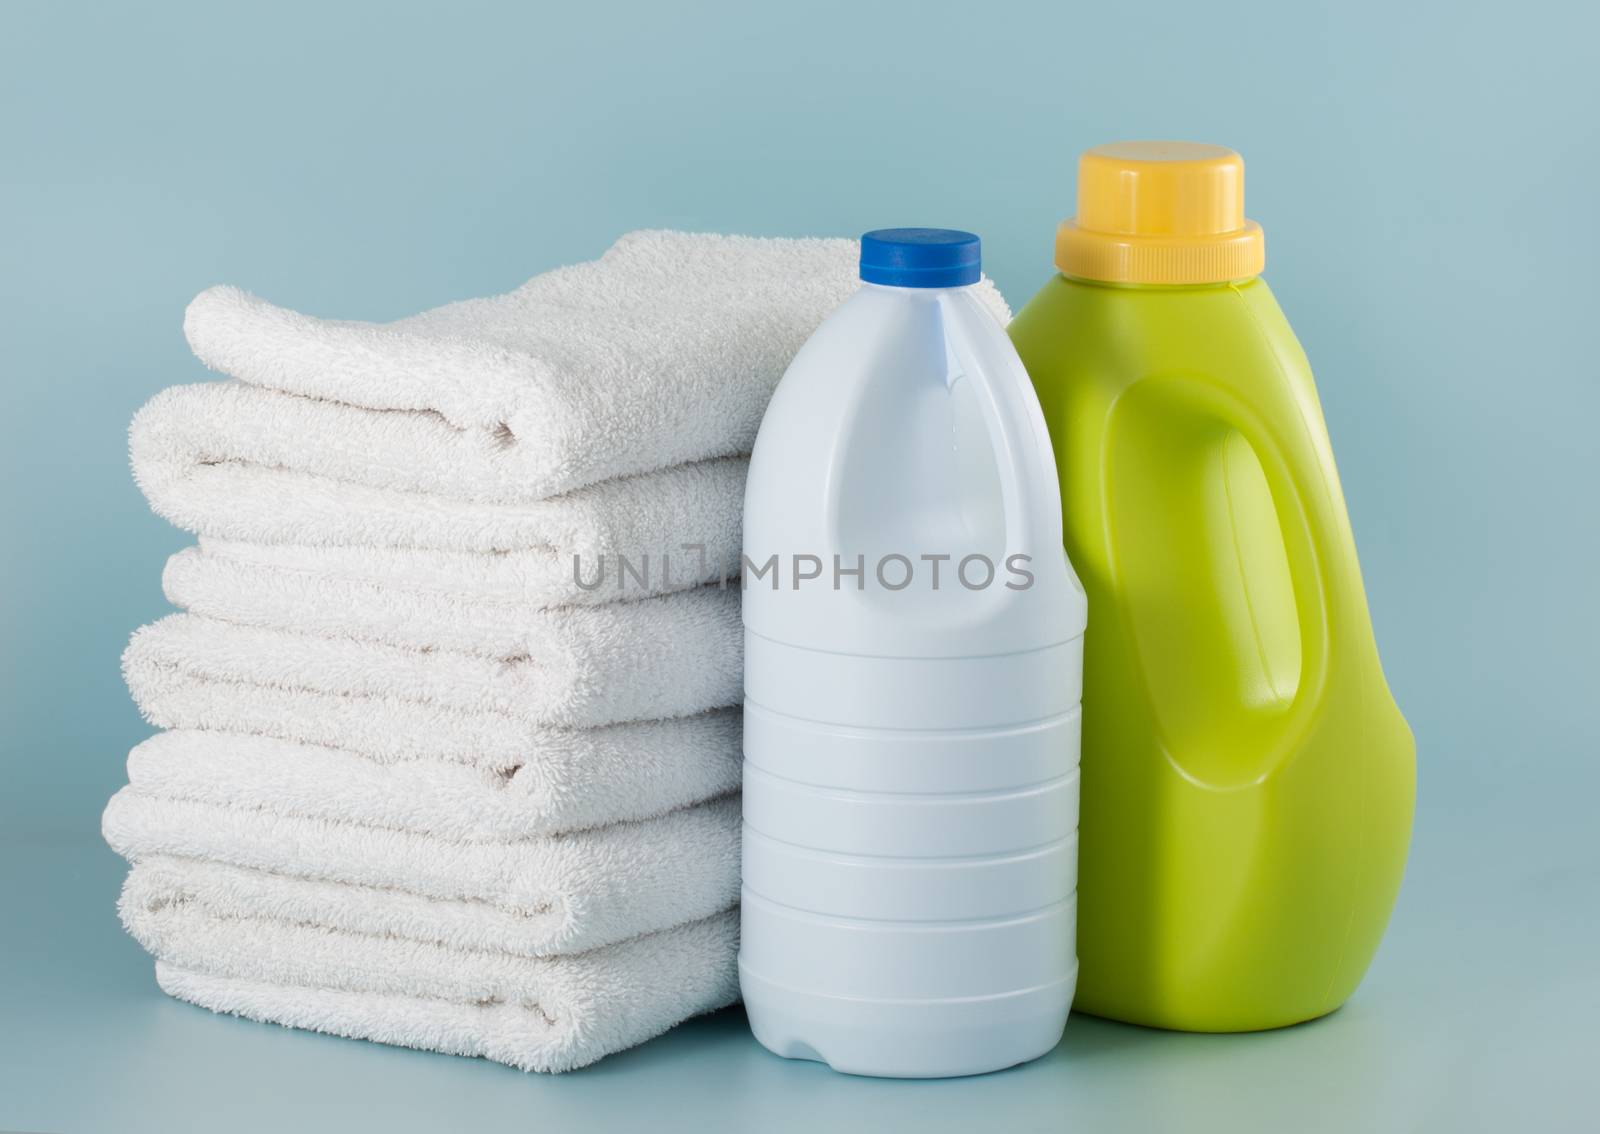 Laundry green detergent bottle and white bleach bottle